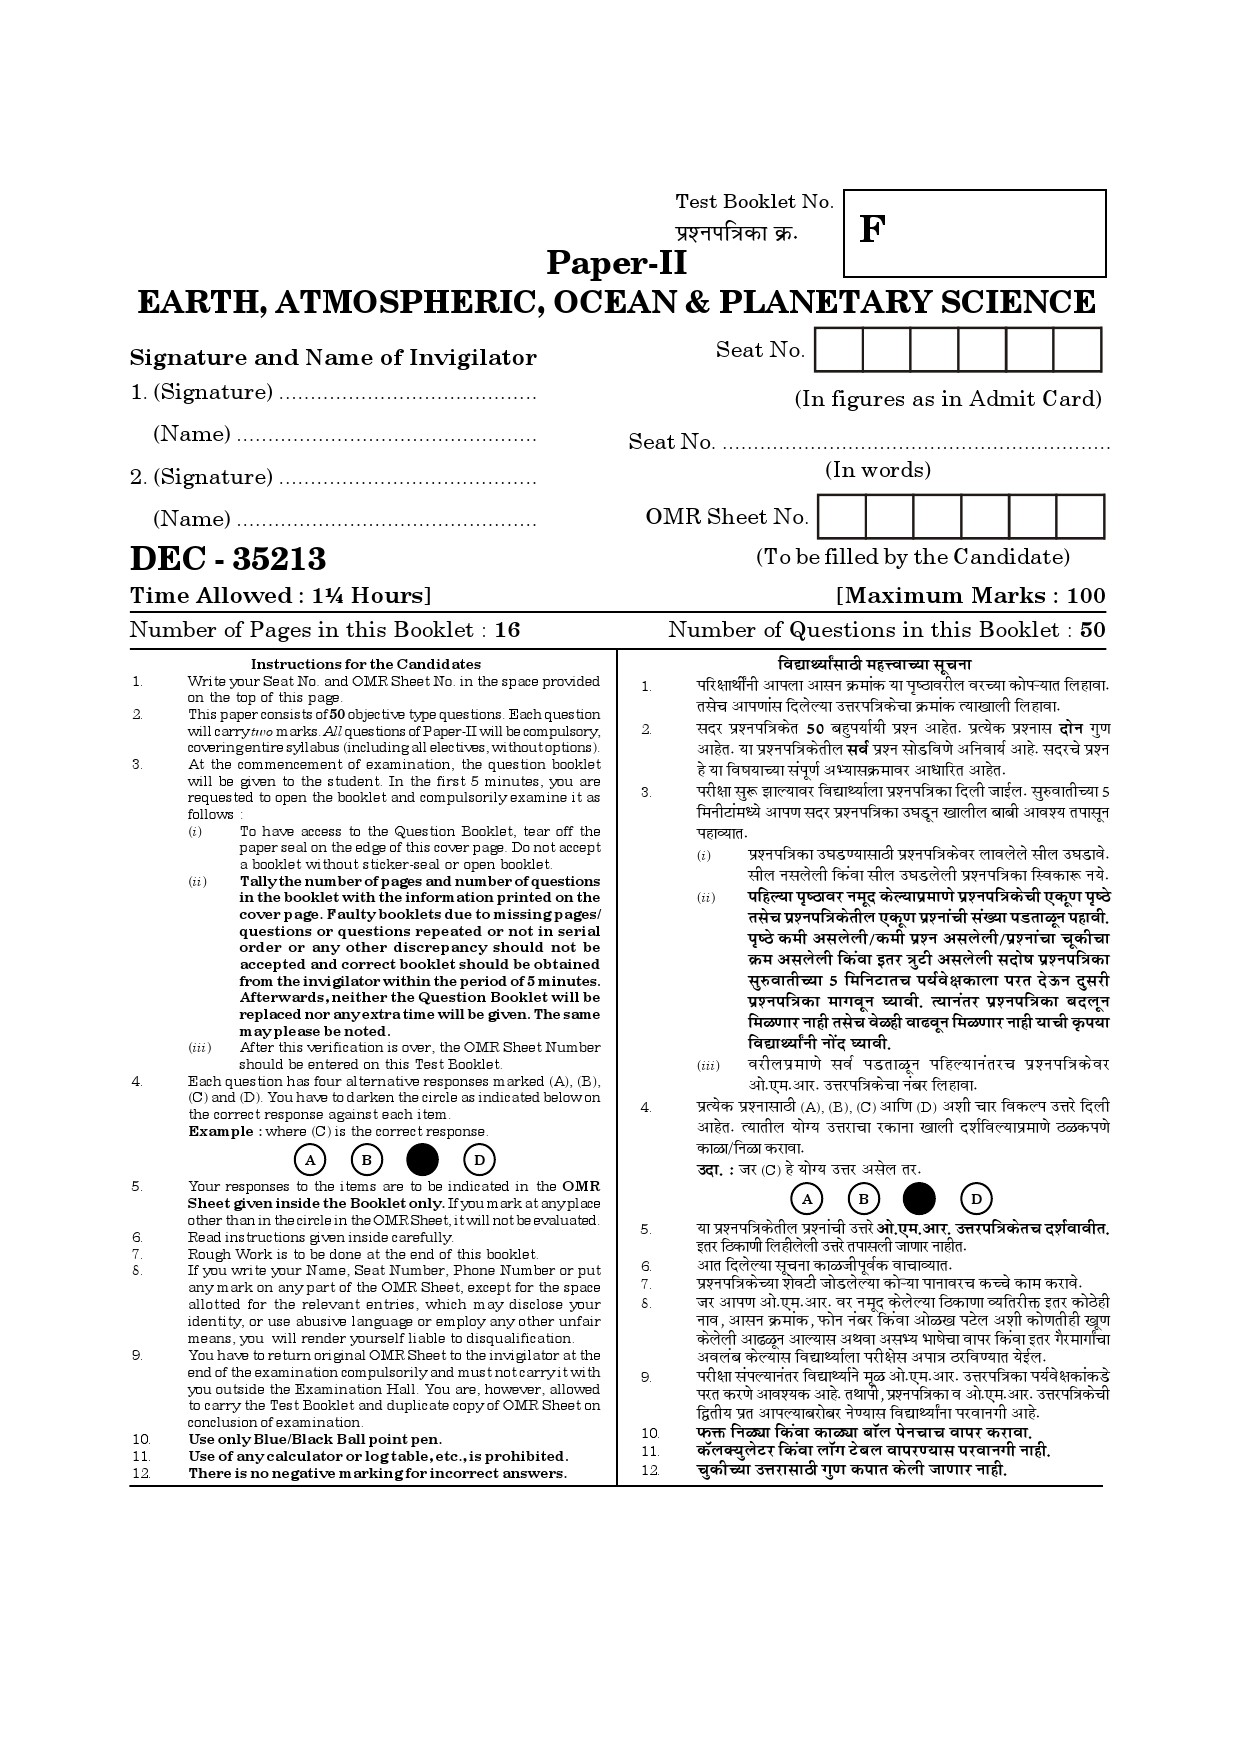 Maharashtra SET Earth Atmospheric Ocean Planetary Science Question Paper II December 2013 1